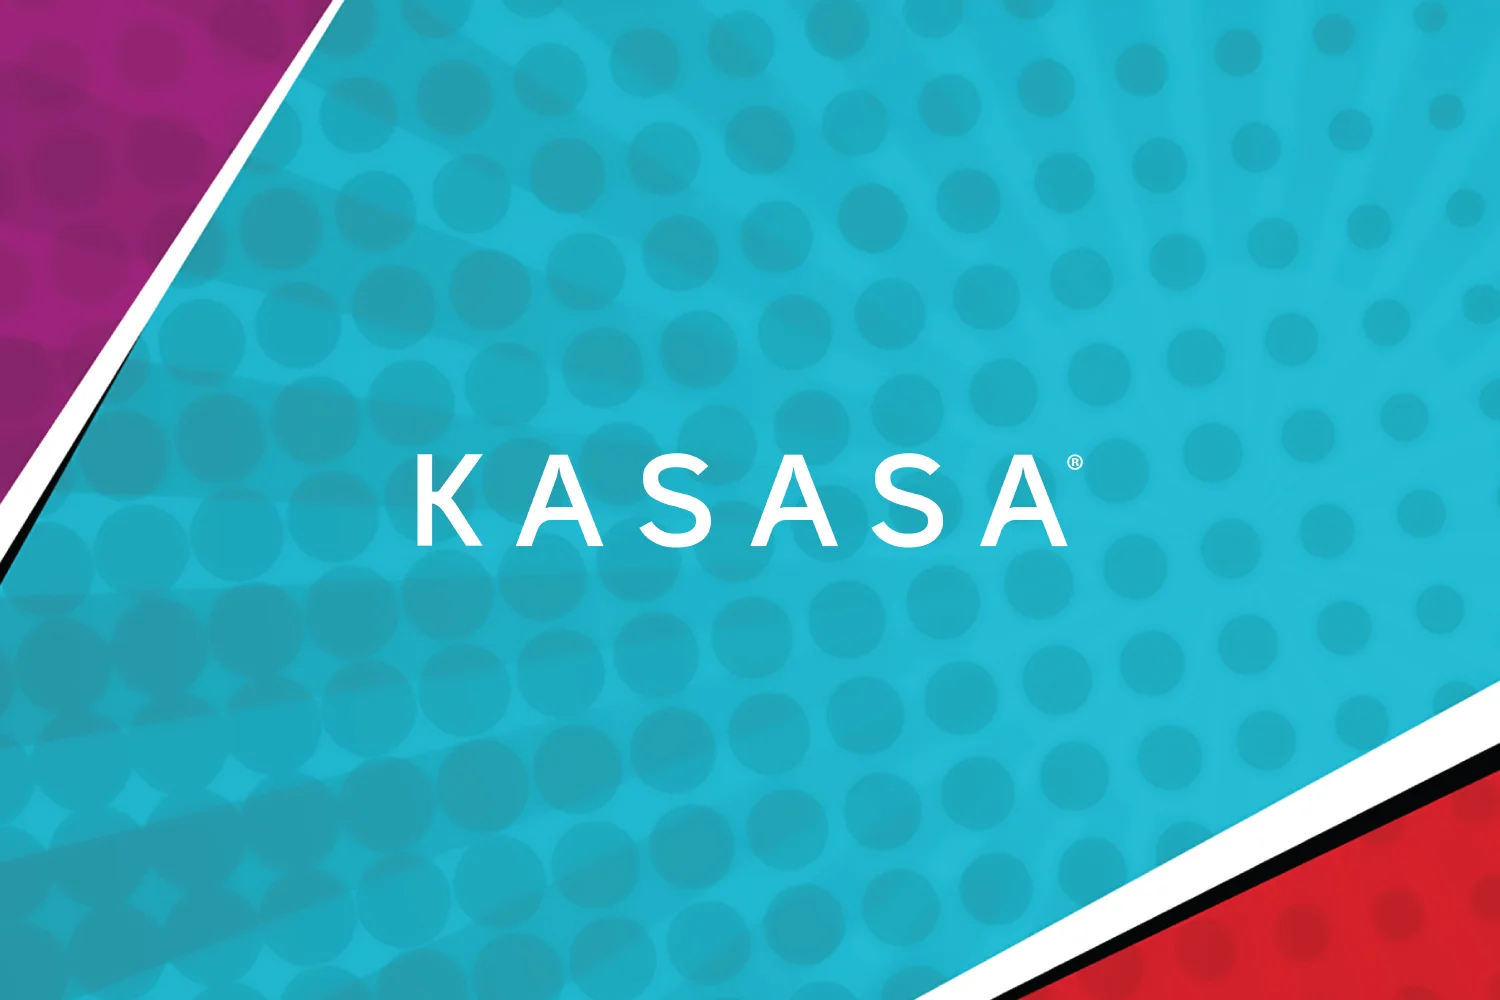 Kasasa logo in white over Kasasa web themed background